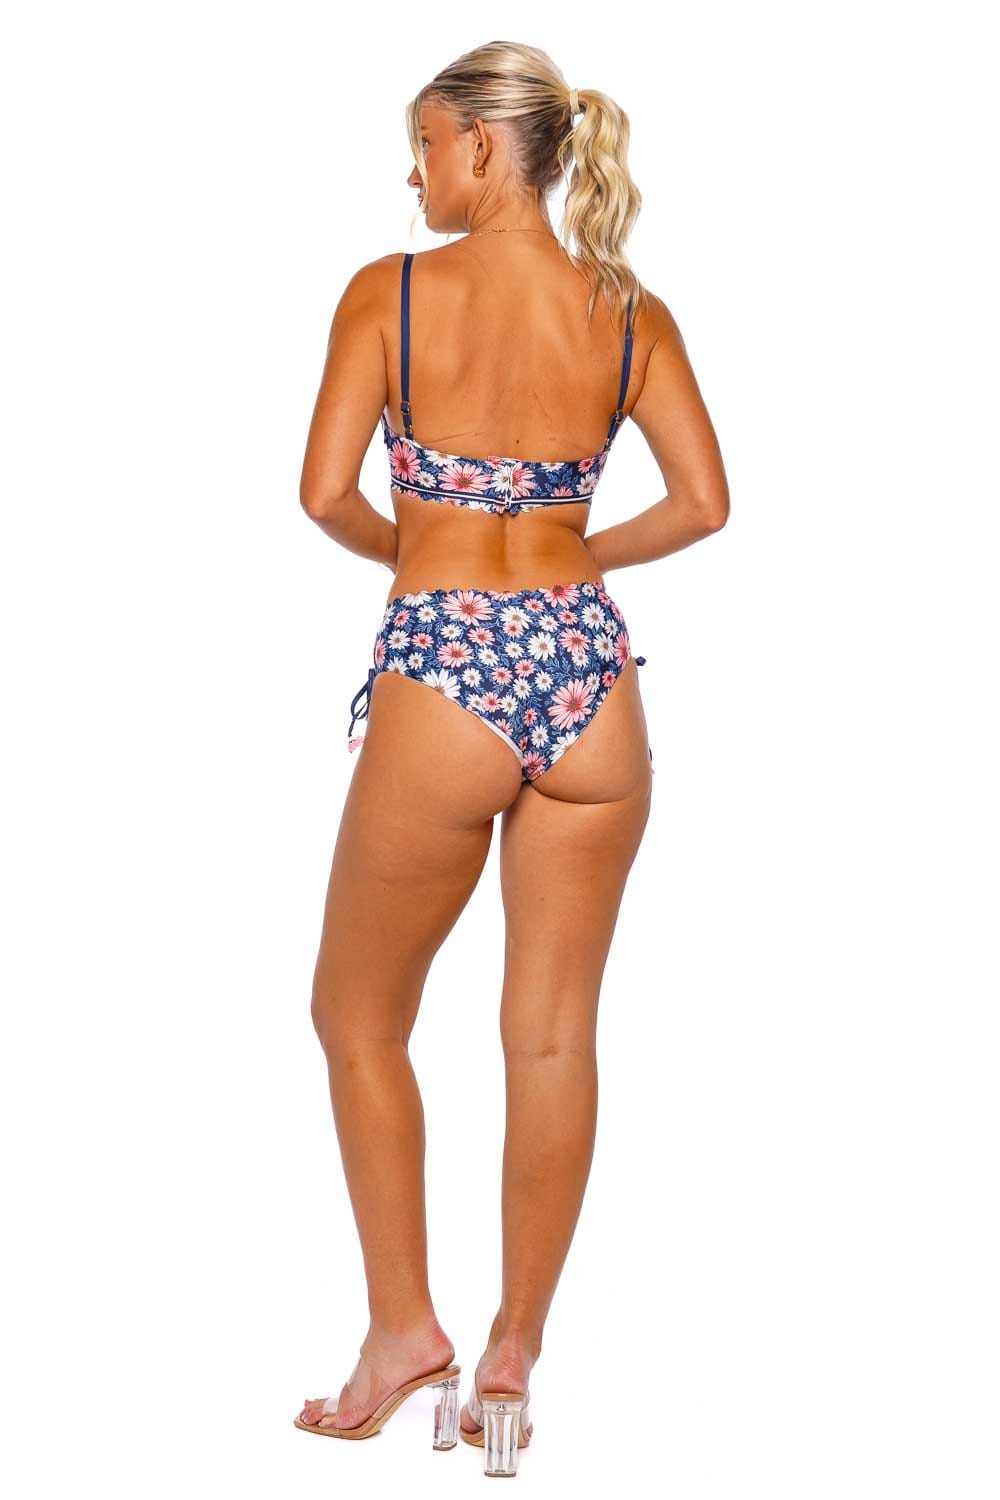 Agua Bendita Lauren Ross Wired Bikini Top